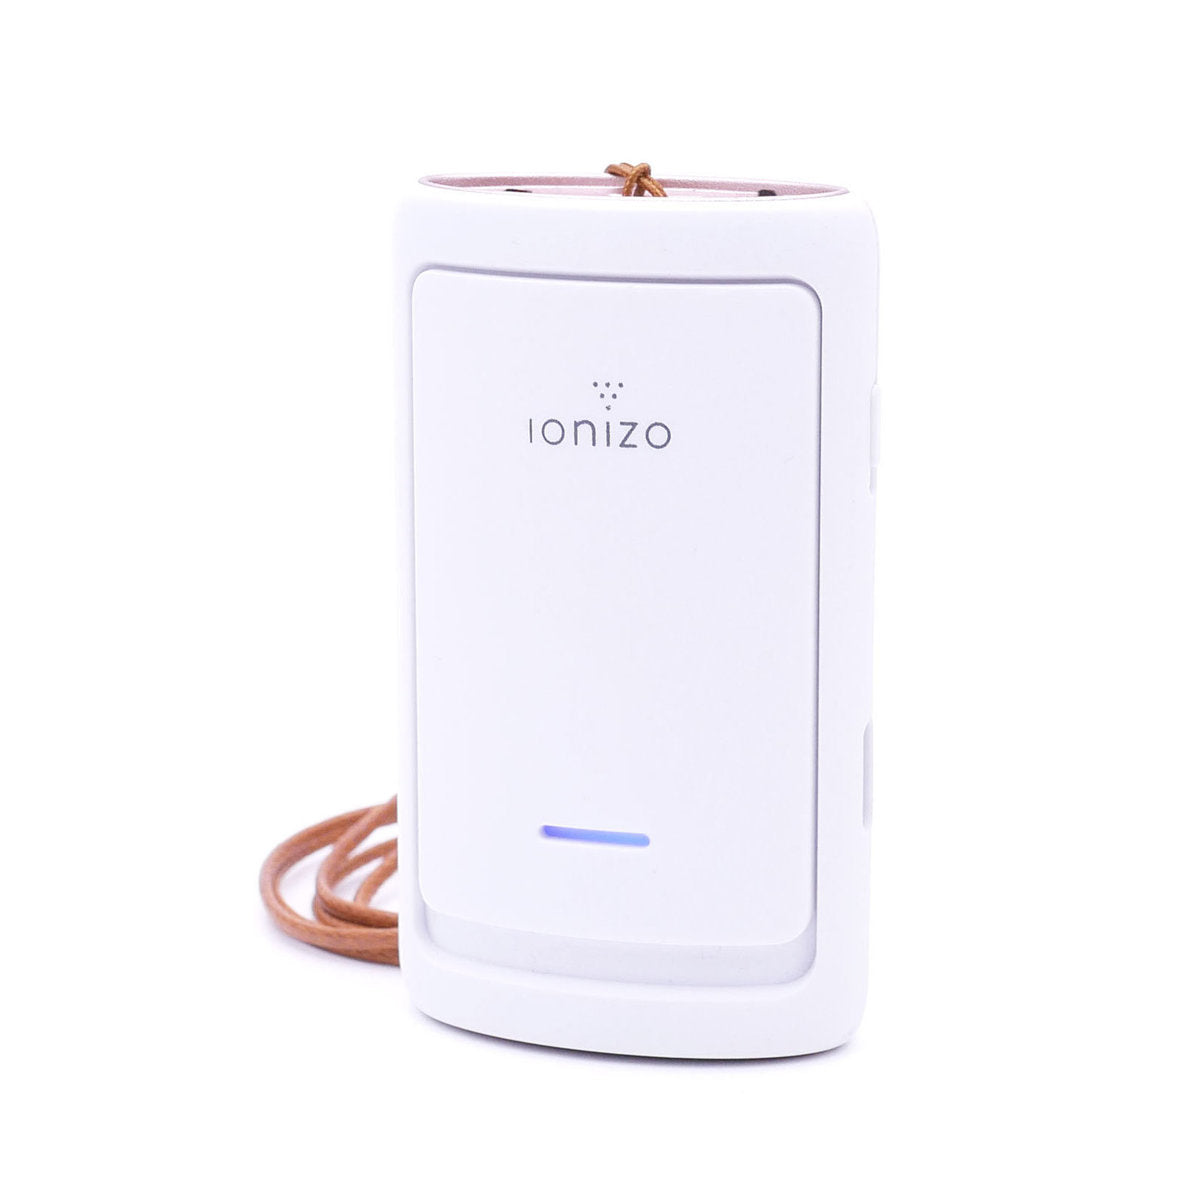 Ionizo - 2合1 隨身空氣淨化機 + 智能空氣驗測機 - 金色【香港行貨】